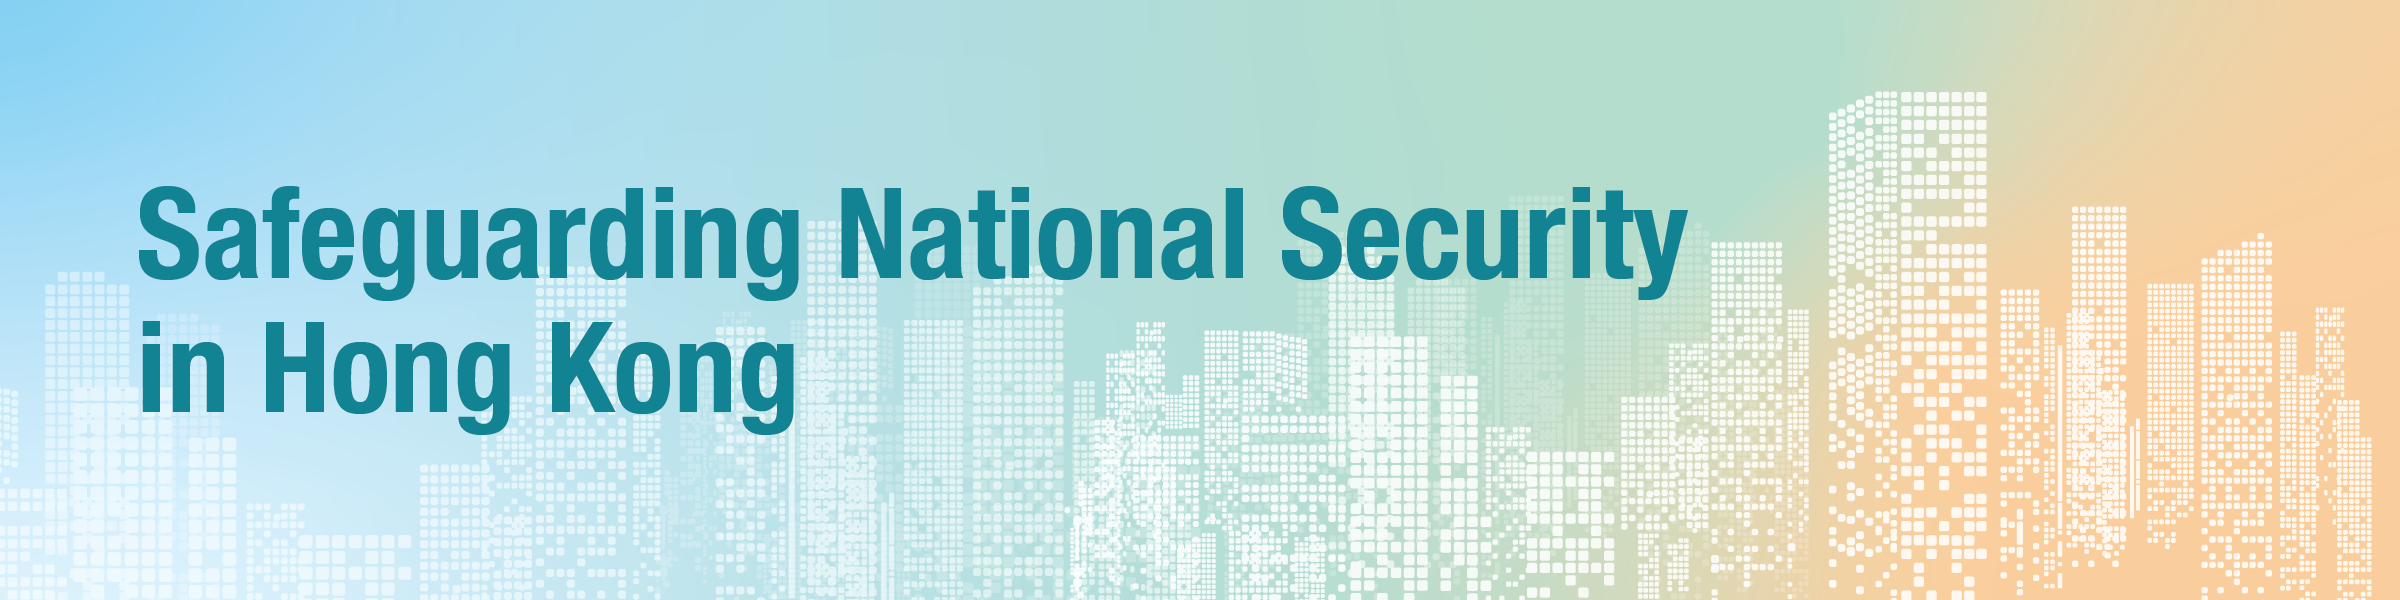 Safeguarding National Security in Hong Kong - Home